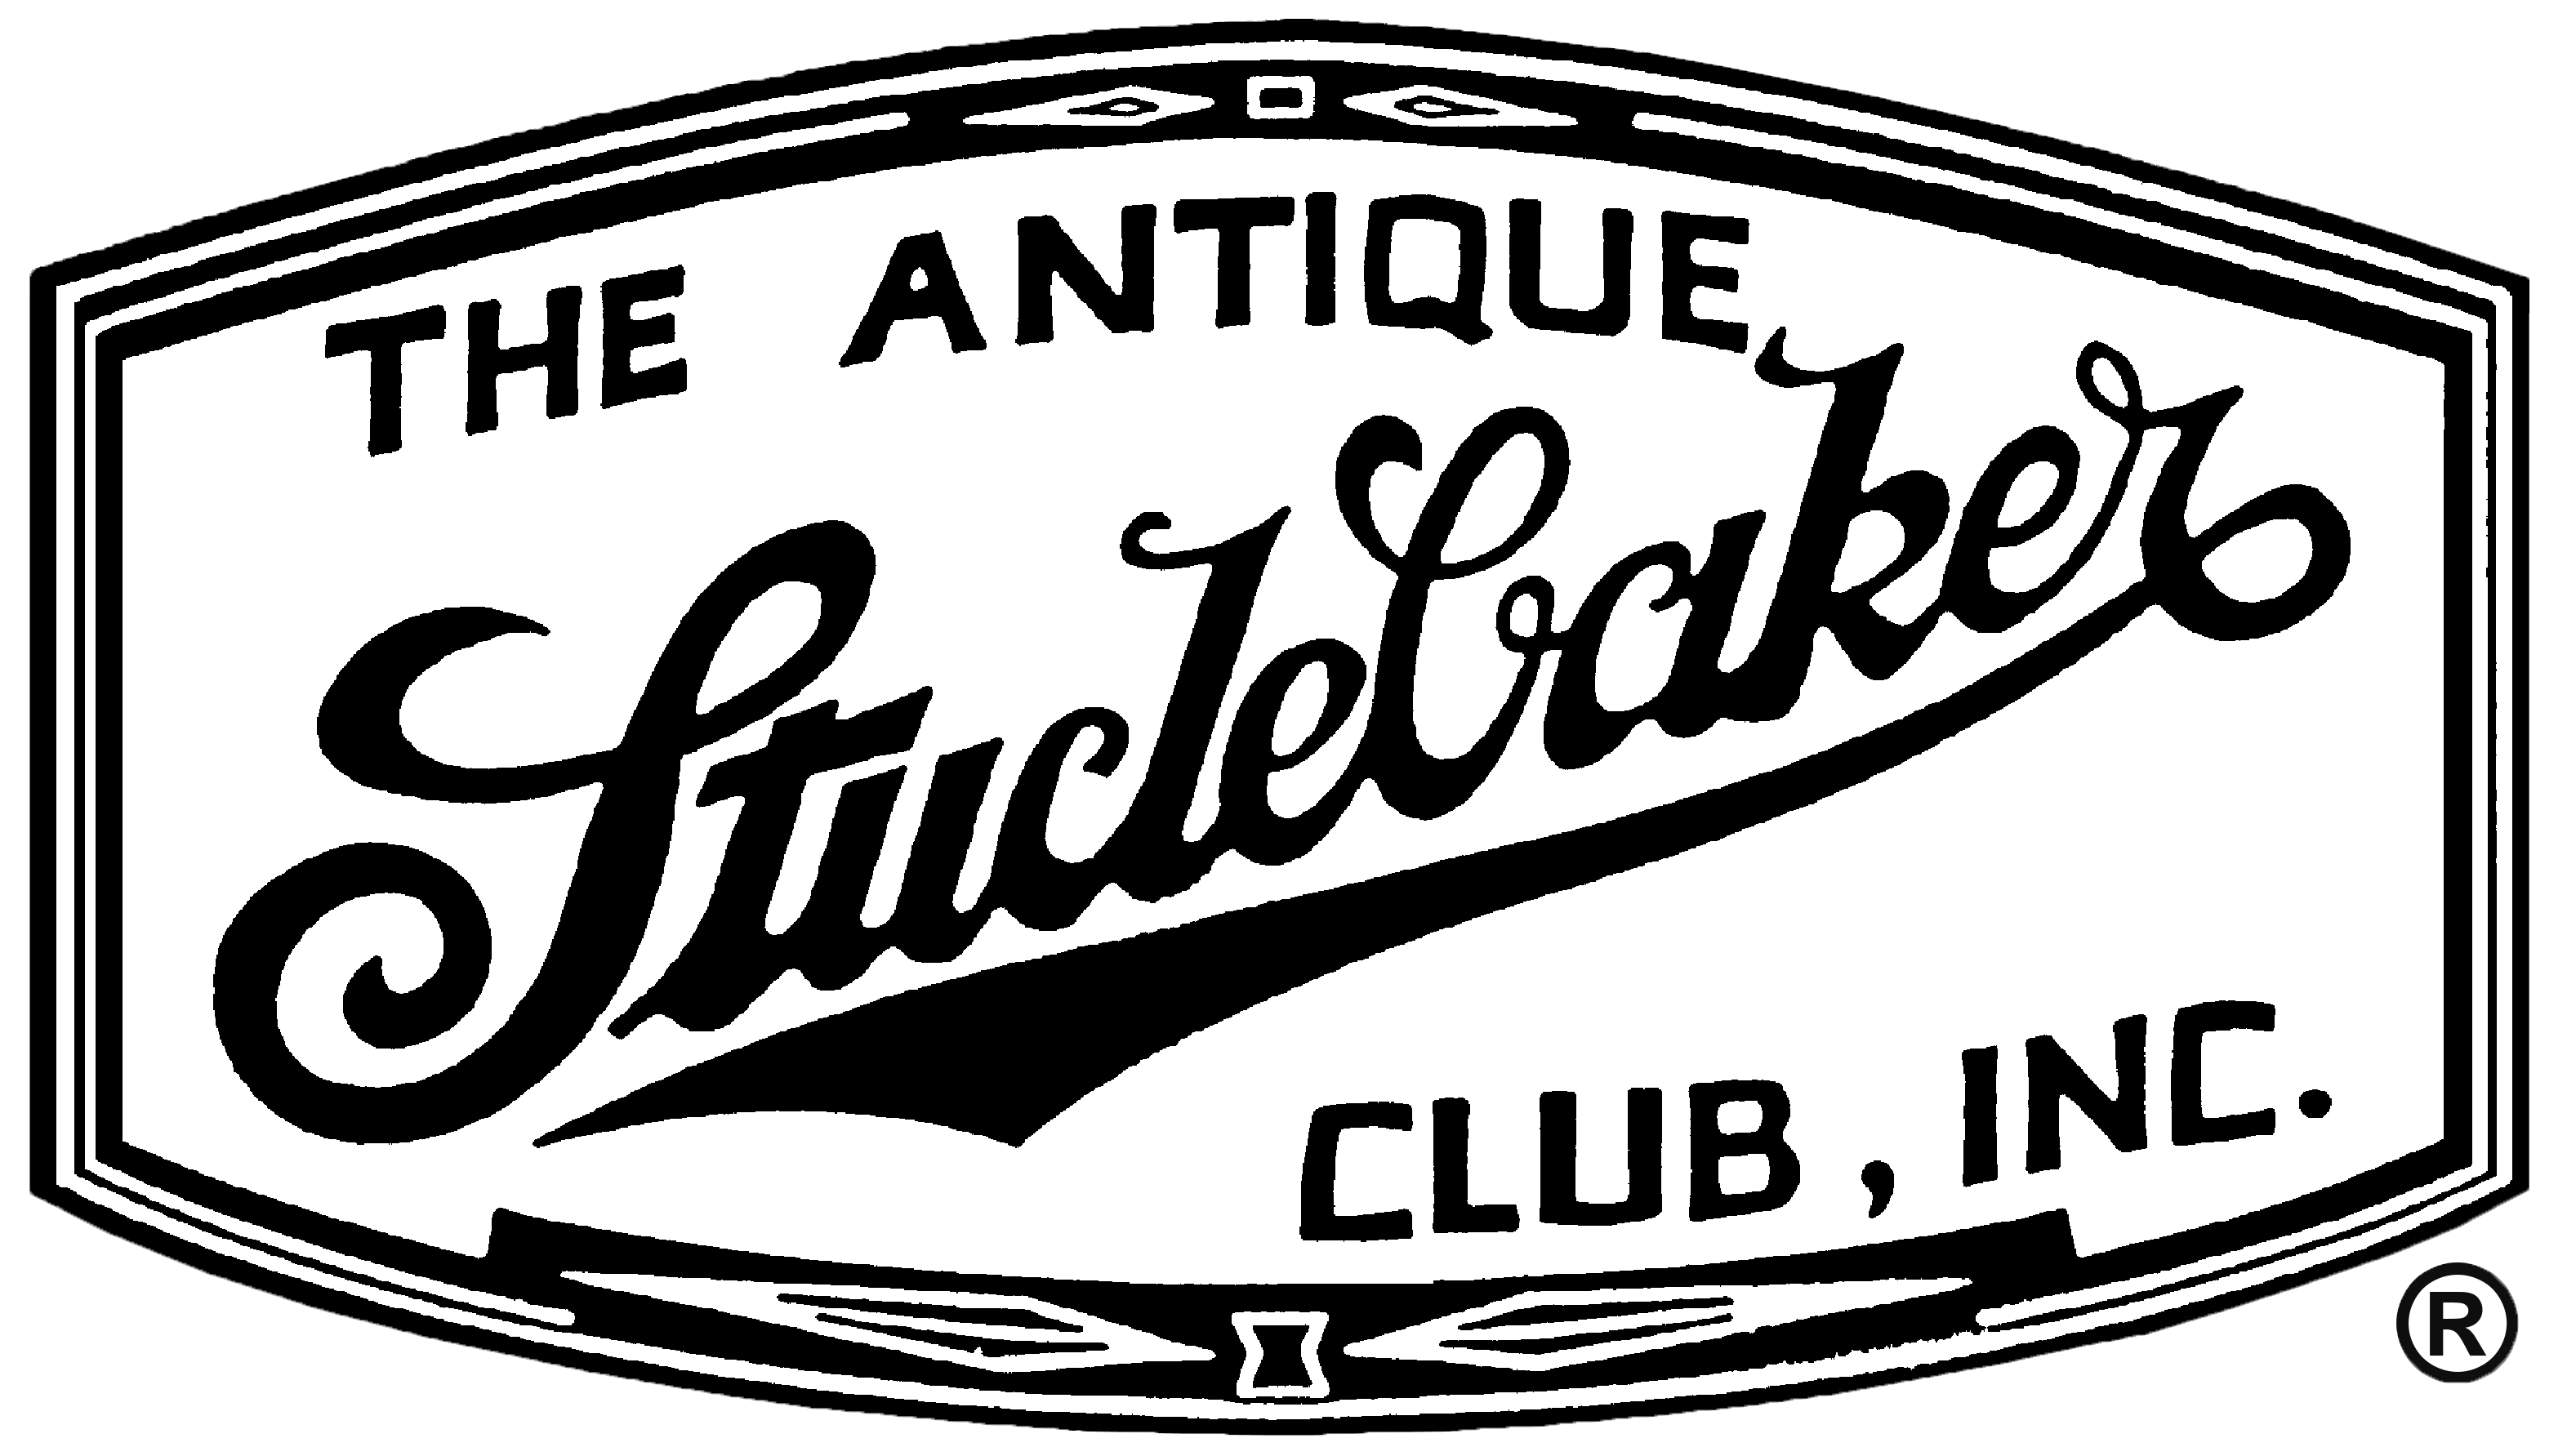 The Antique Studebaker Club